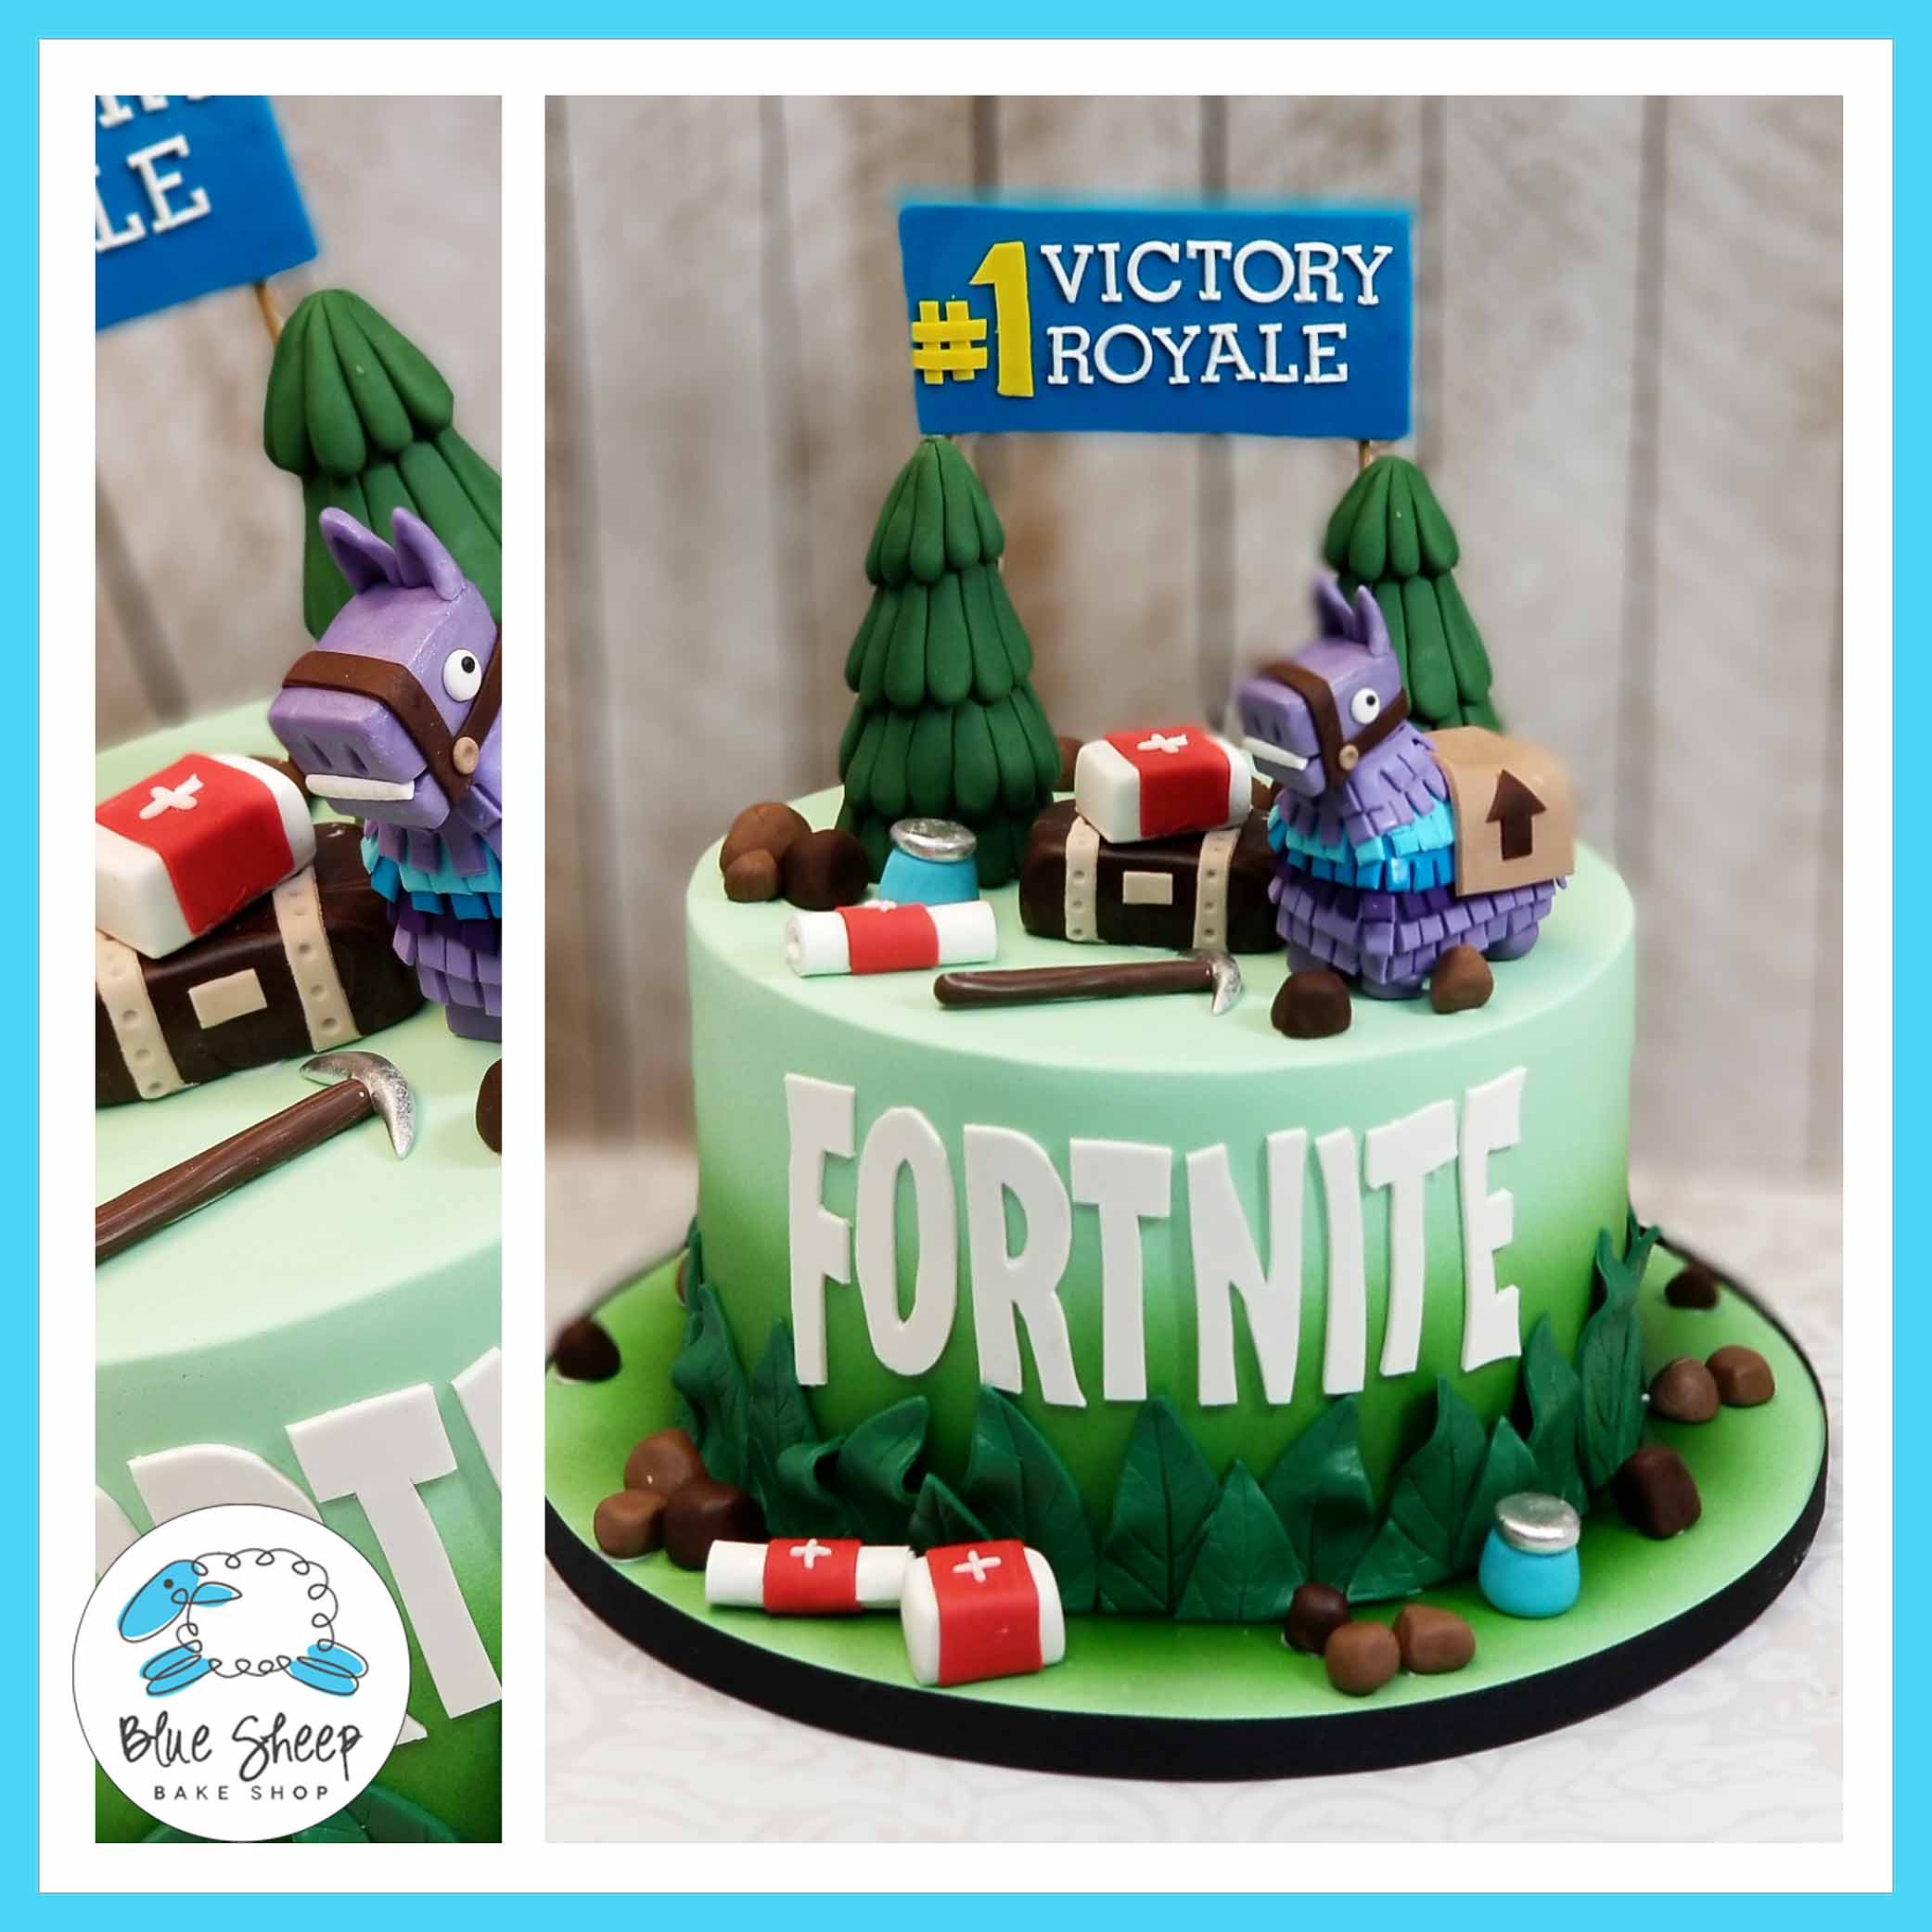 fortnite battle royal cake nj custom cakes blue sheep bake shop - images of fortnite cakes